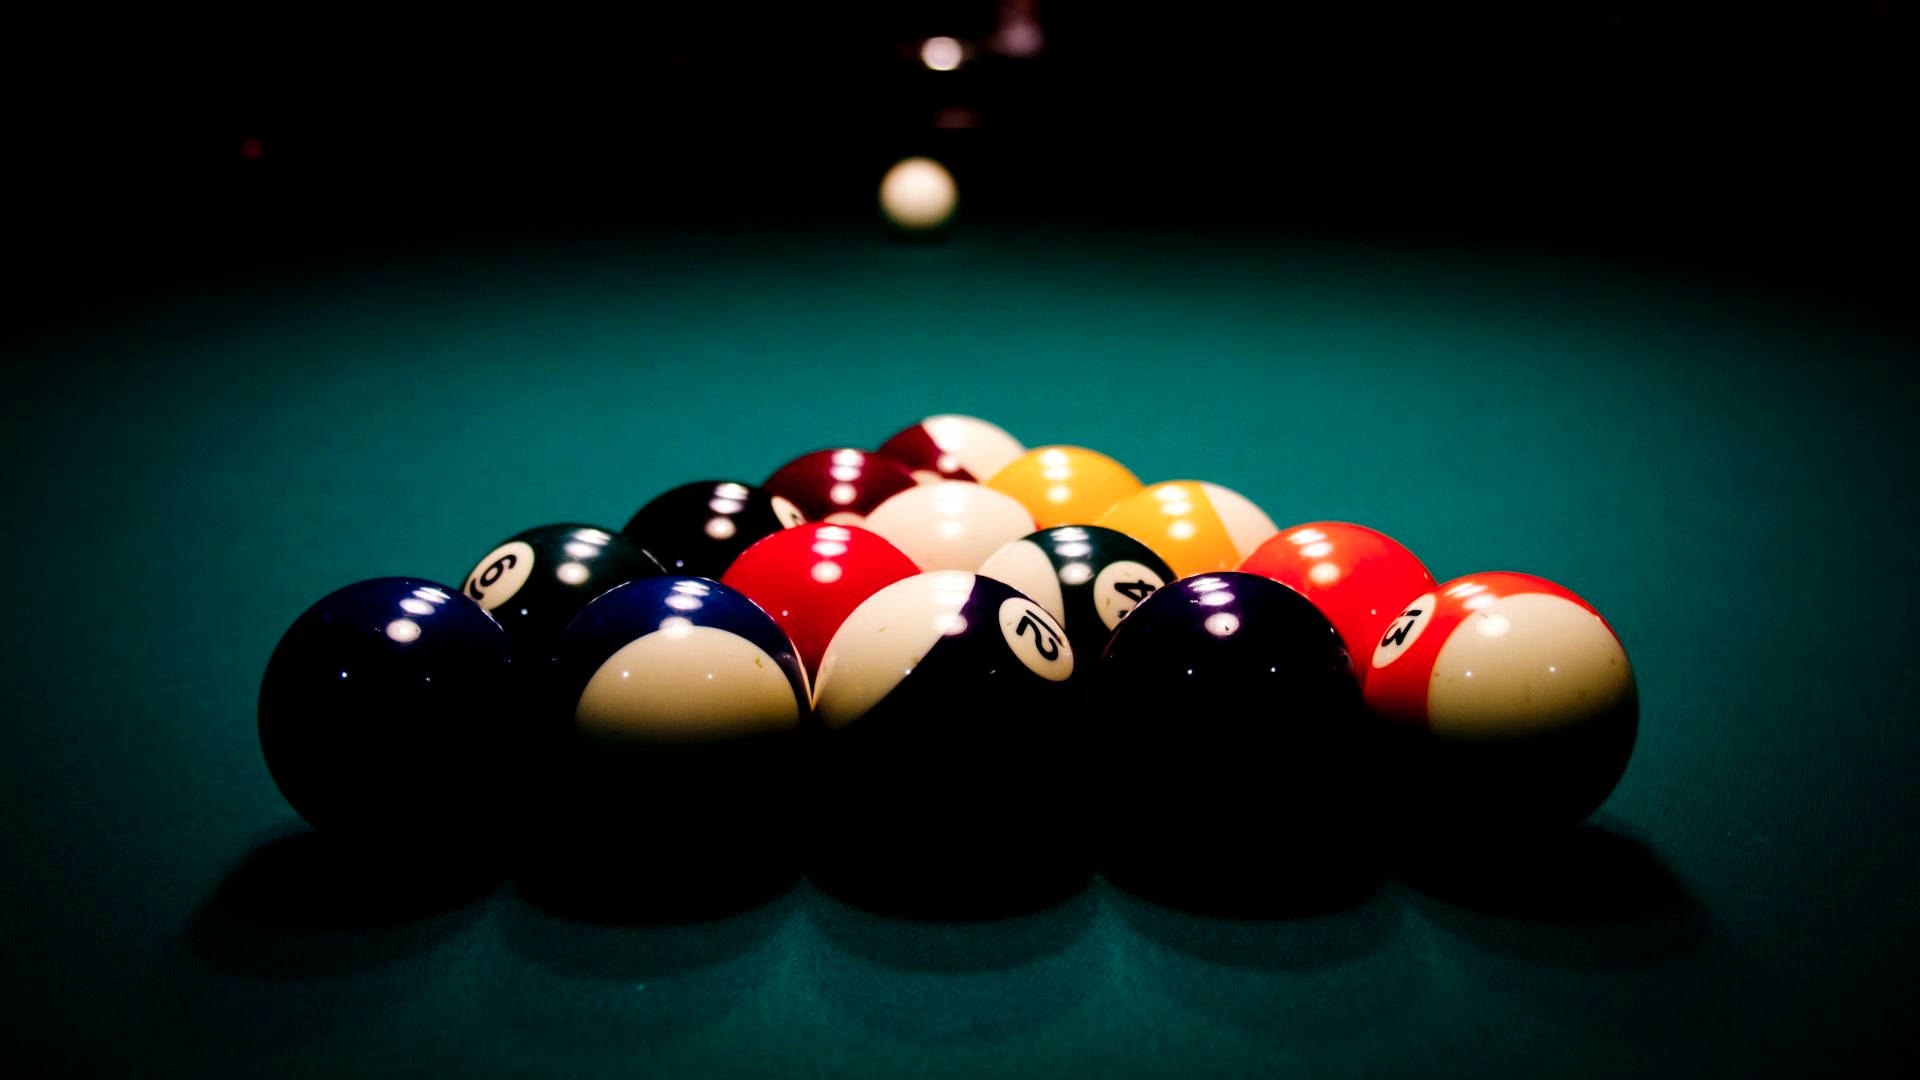 Billiards Balls On Pool Table Shadows Wallpaper